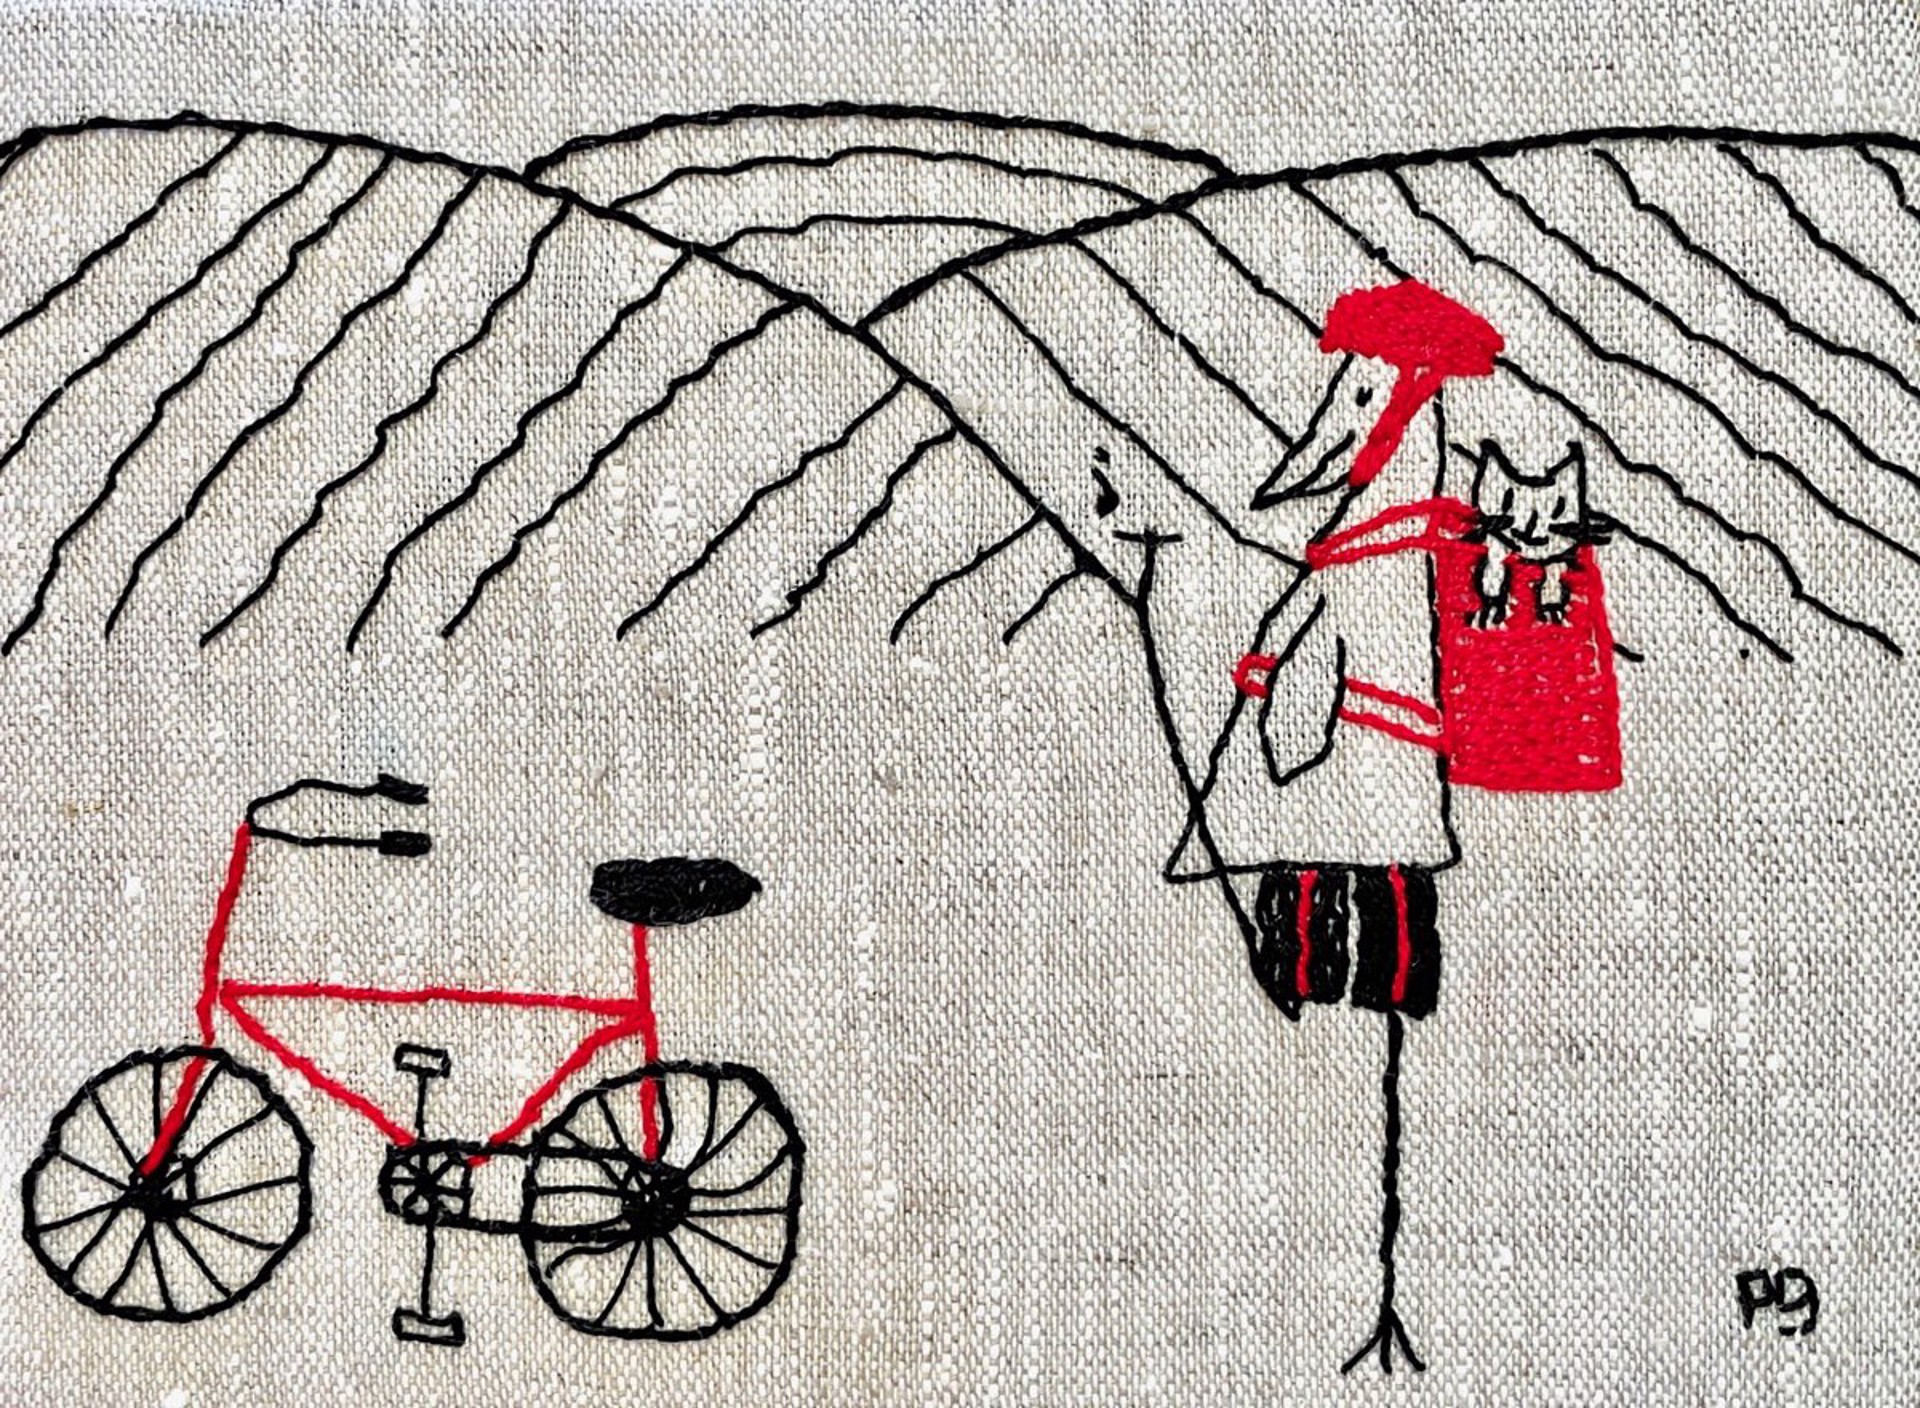 Biking the Vineyards by Peg Grady